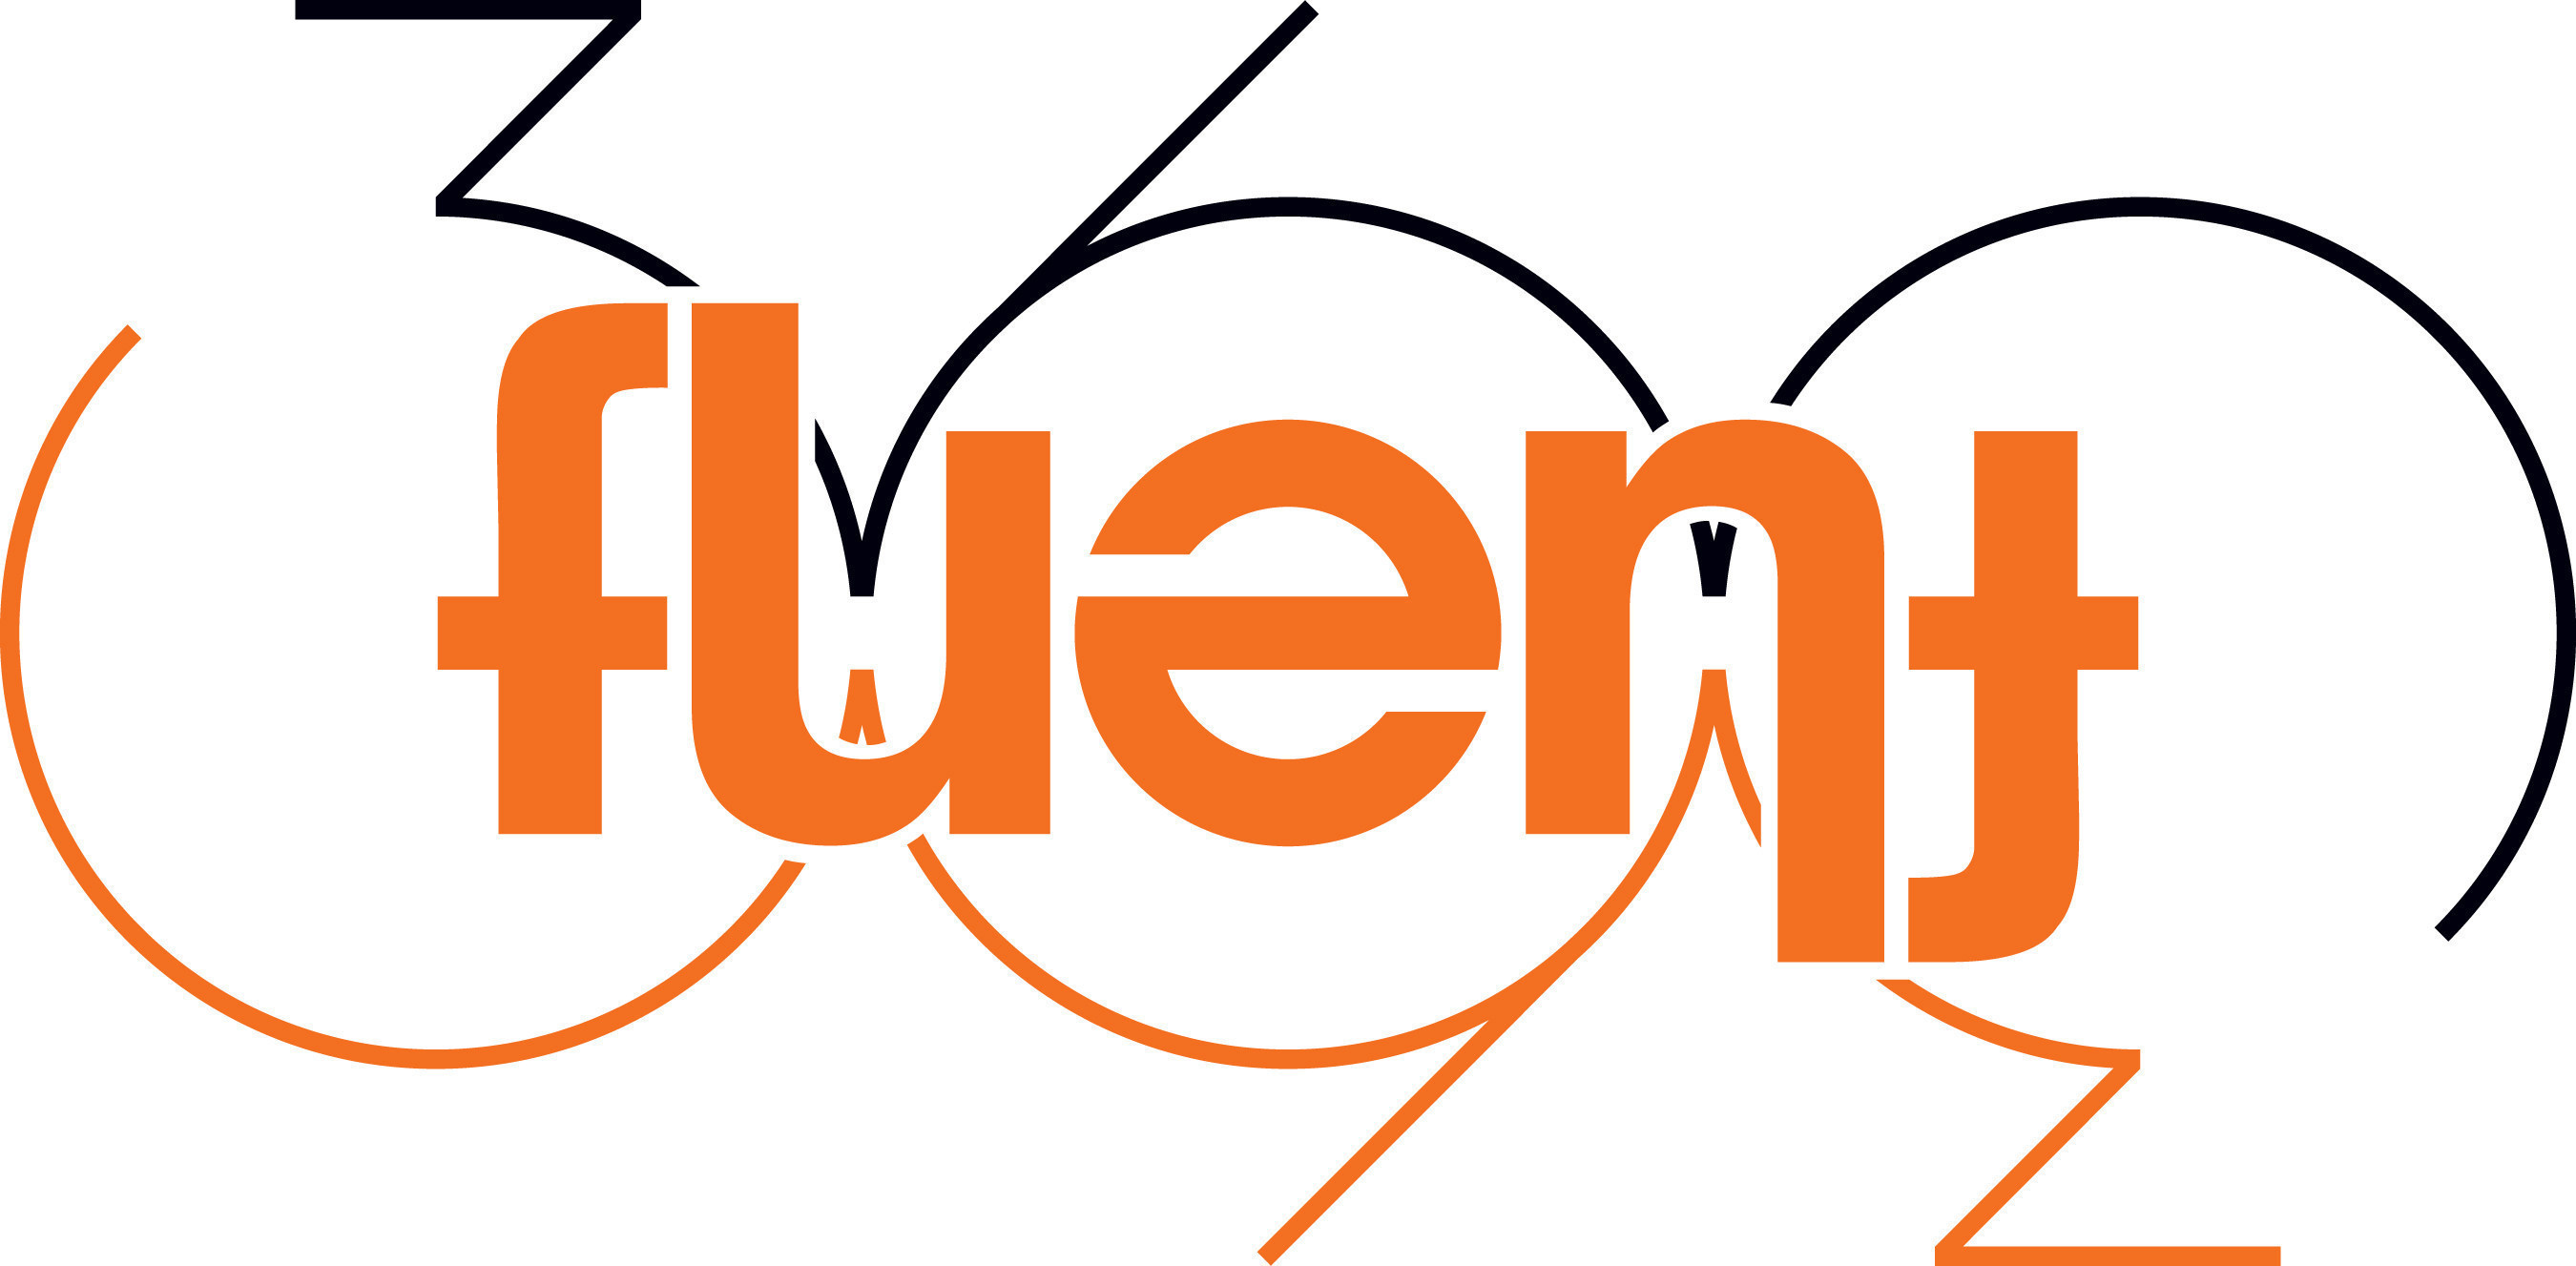 fluent360 logo